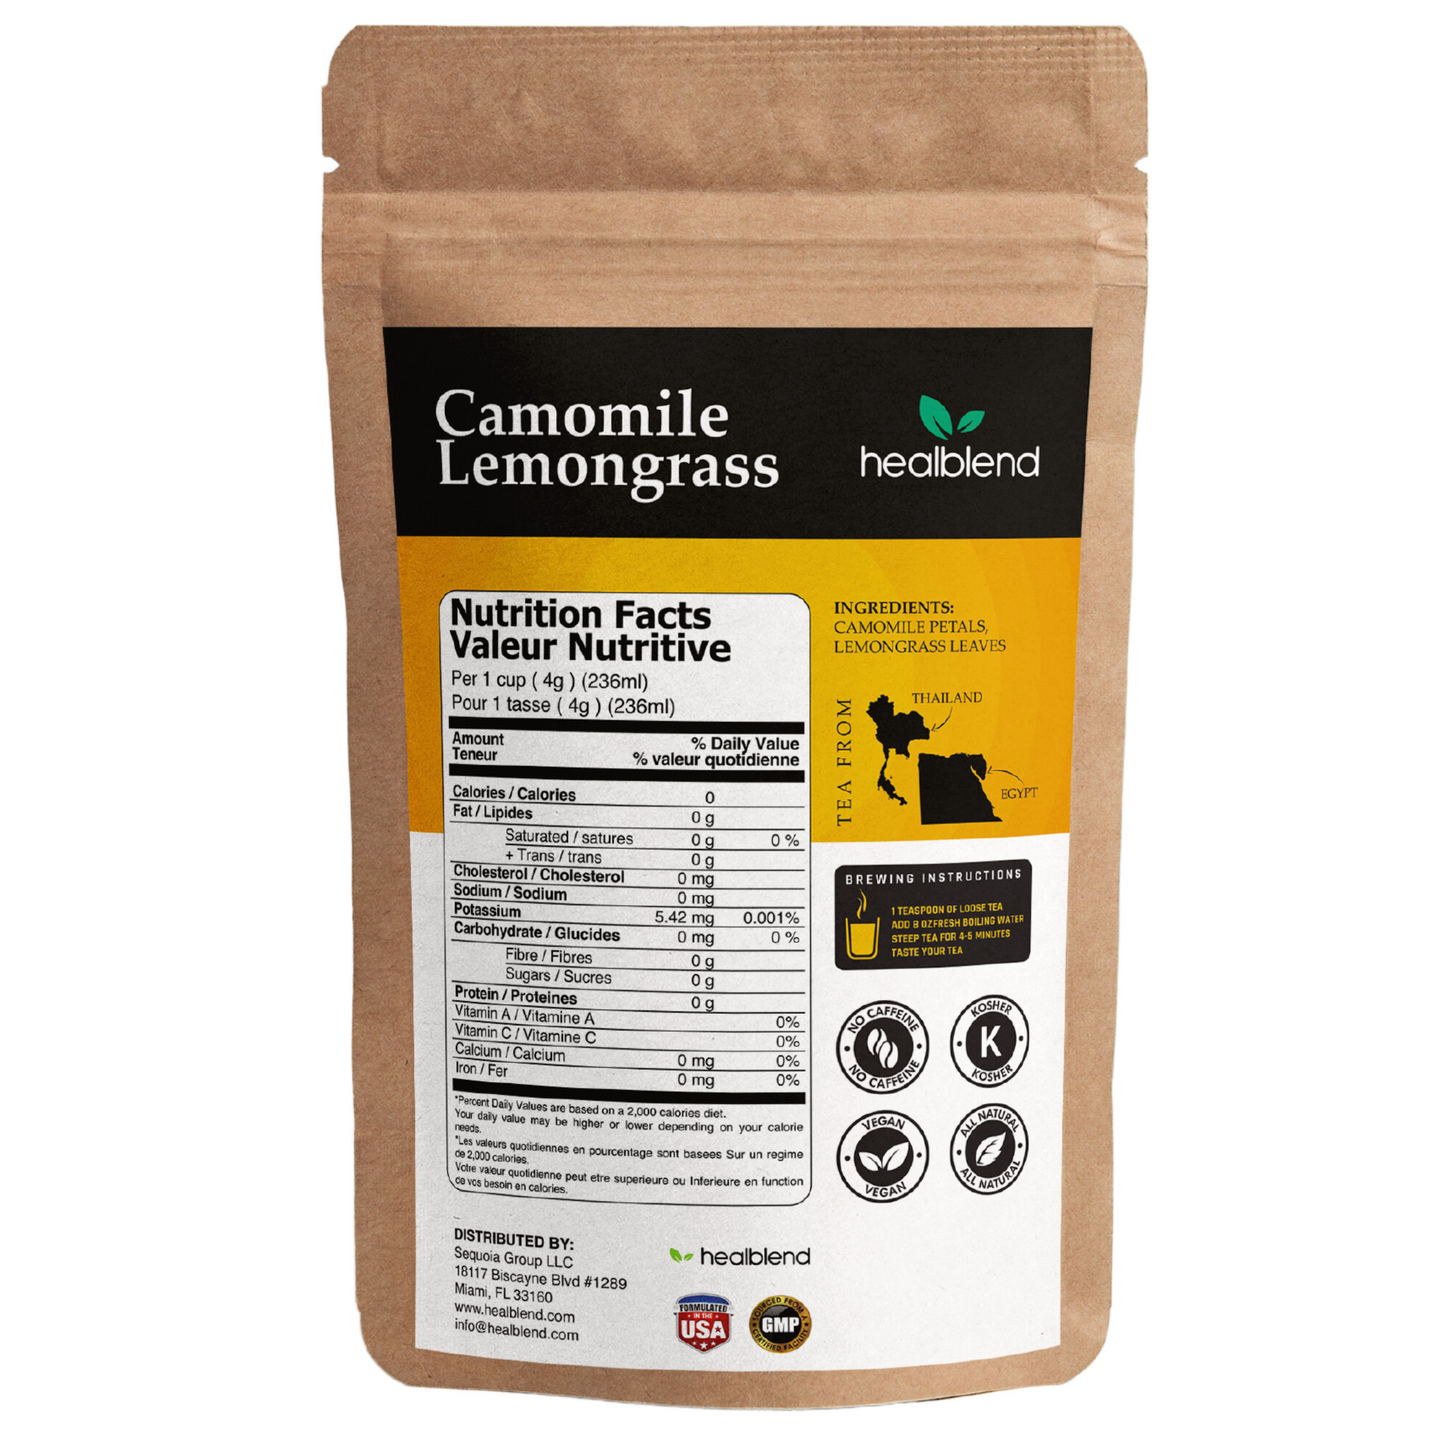 Camomile & Lemongrass Herbal Tea